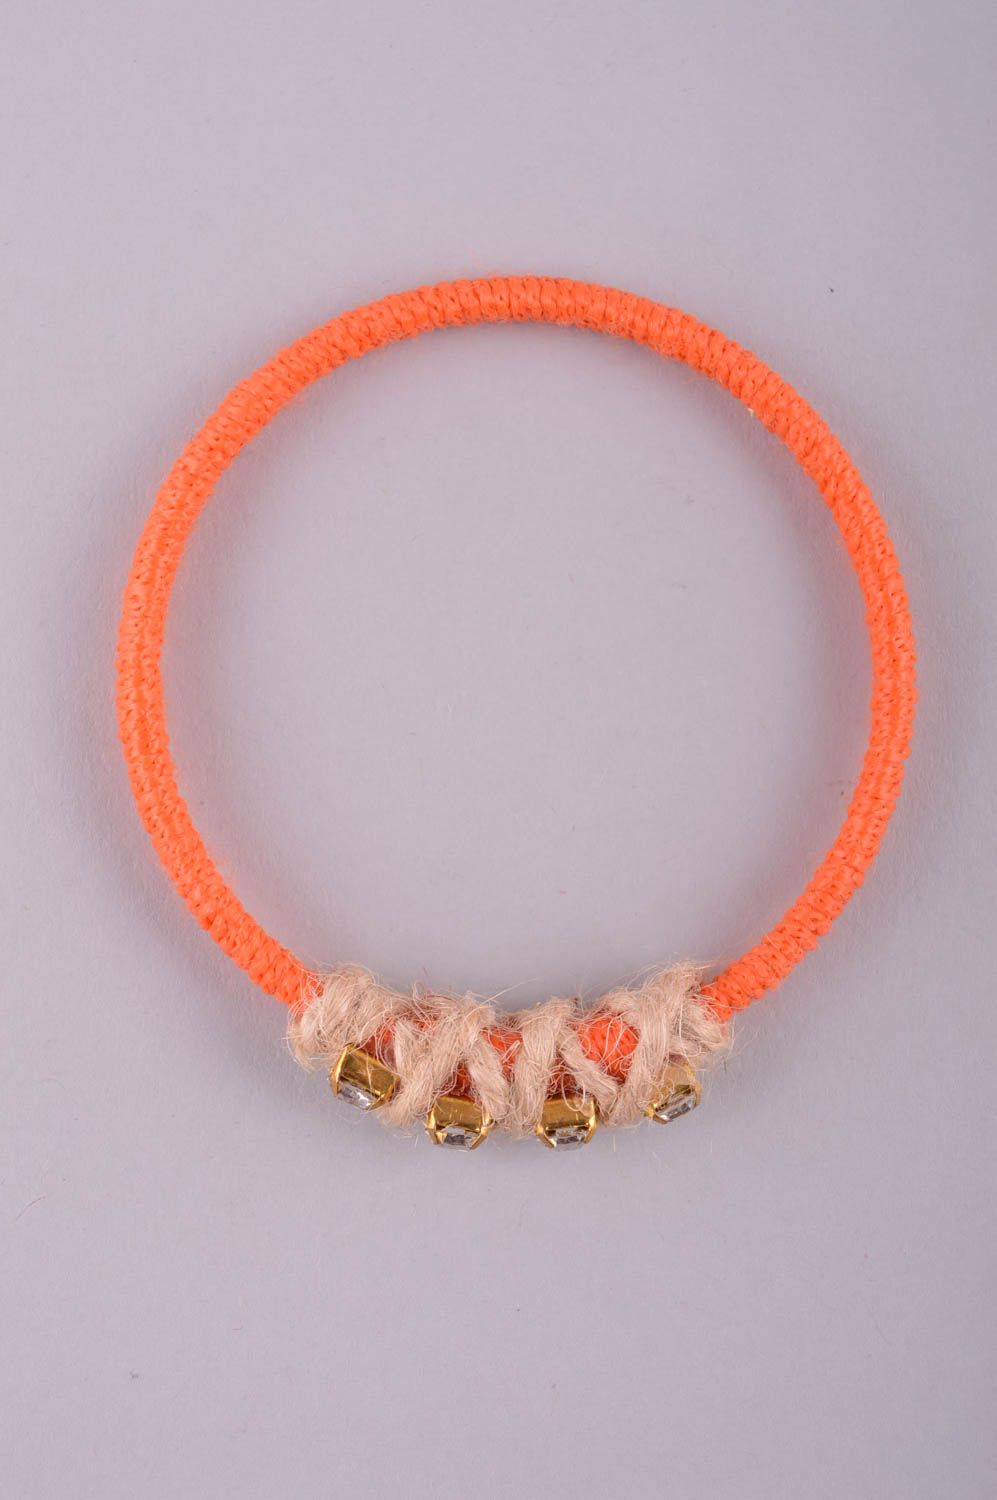 Handmade bracelet wrist bracelet designer accessories for girls gifts for her photo 2